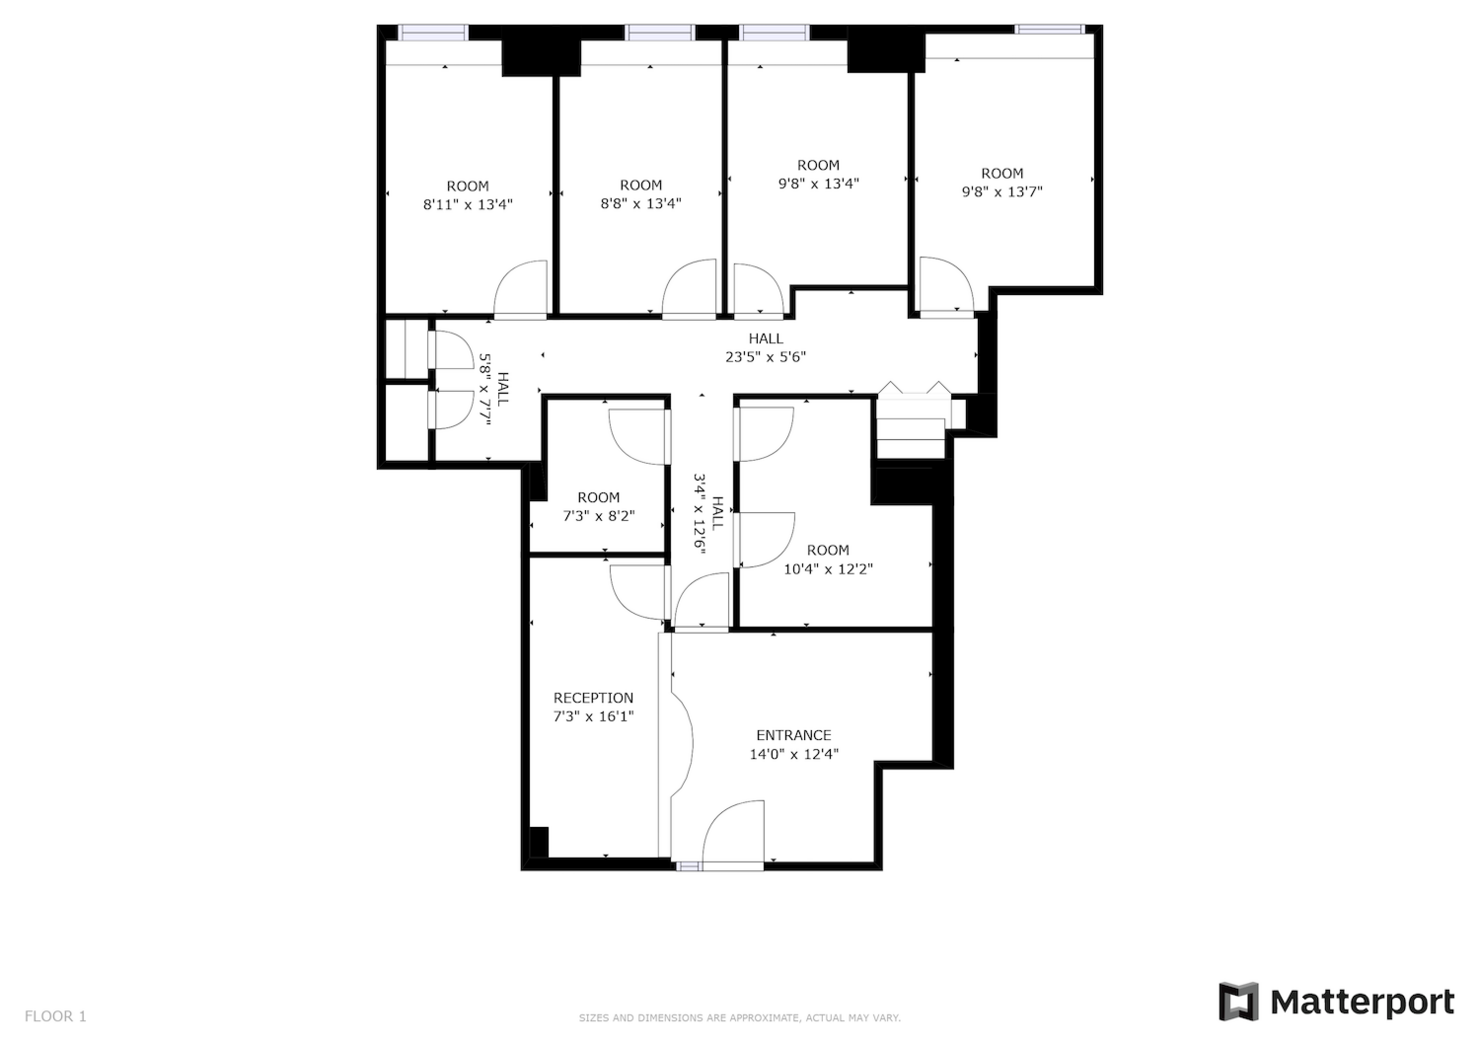 225 Broadway Office Space - Floorplan